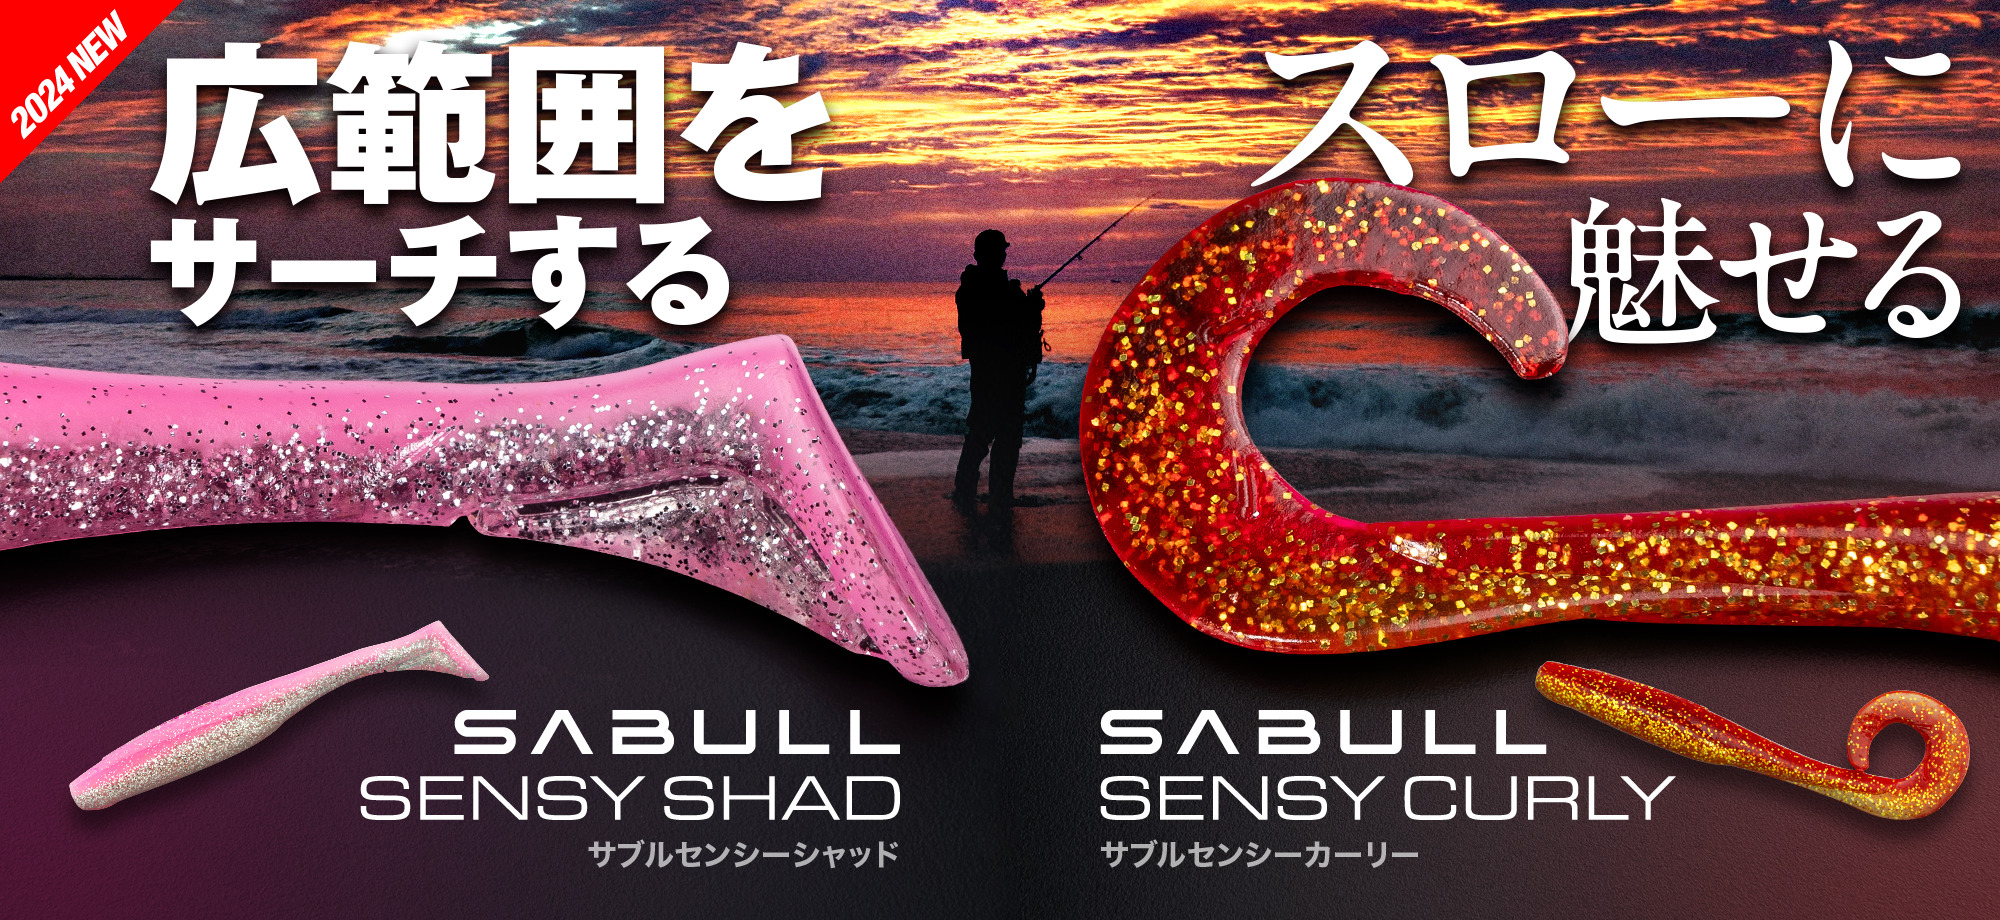 SABULL SENSY SHAD / CURLY